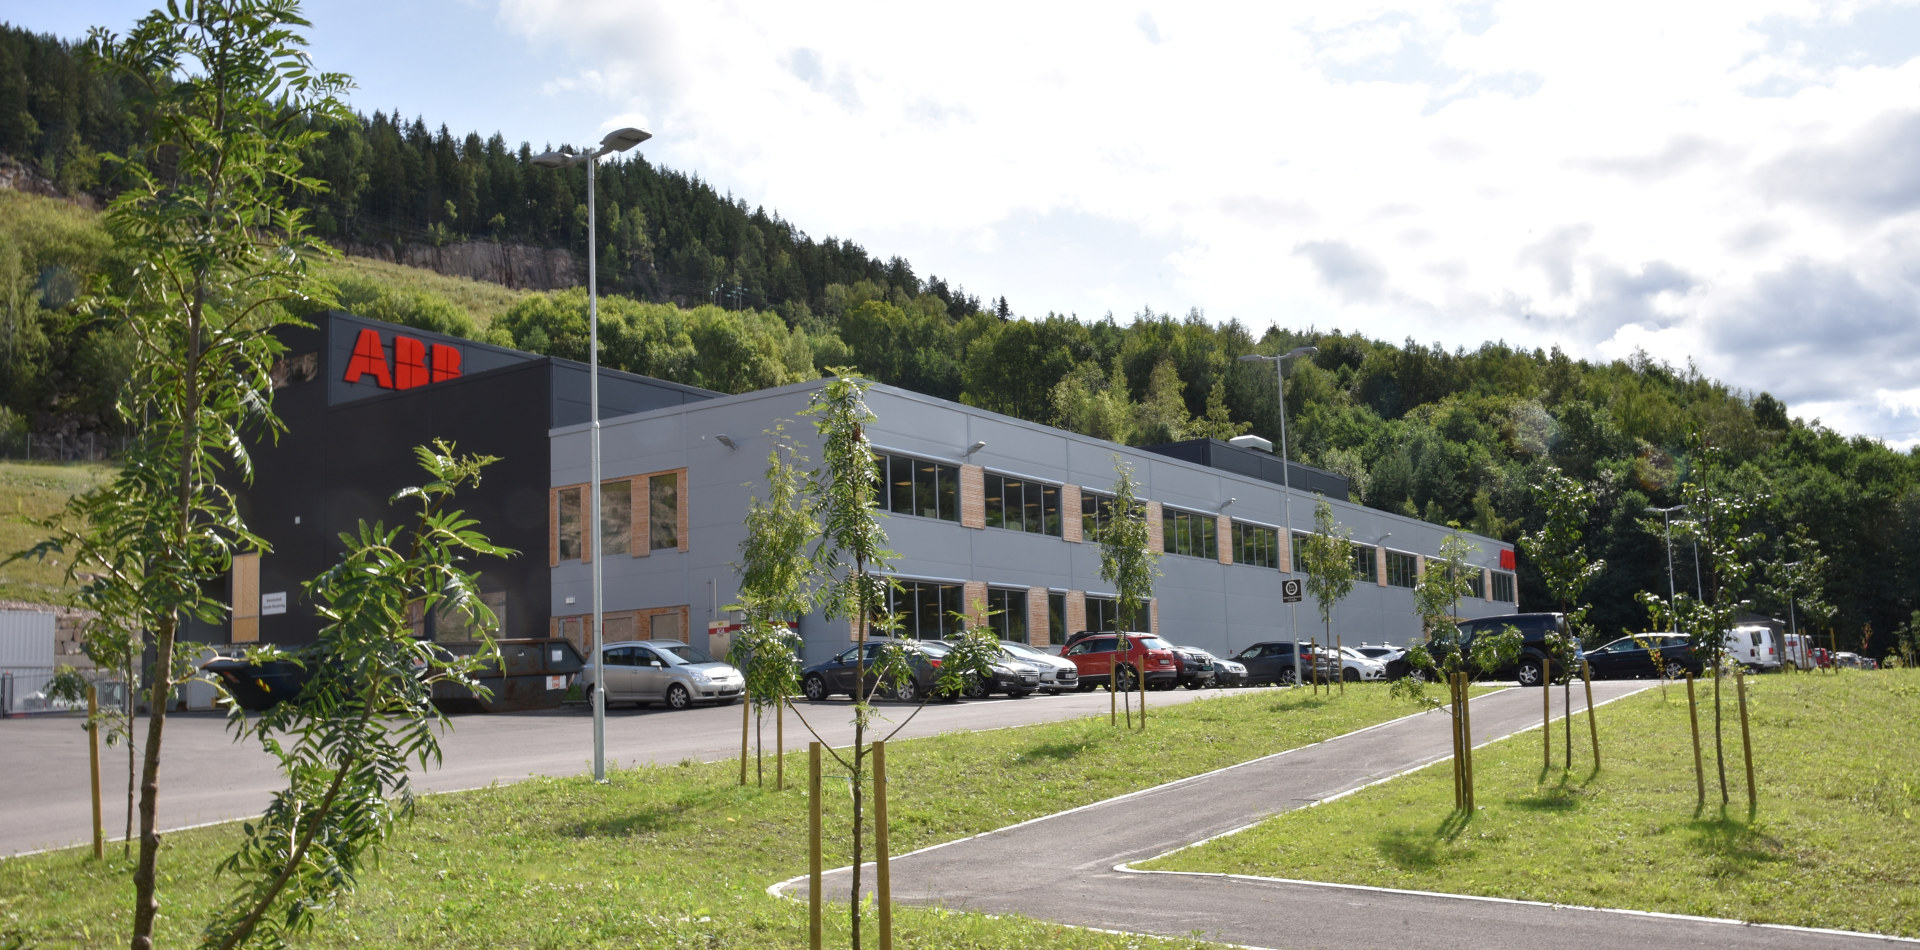 ABBs nye servicesenter i Drammen